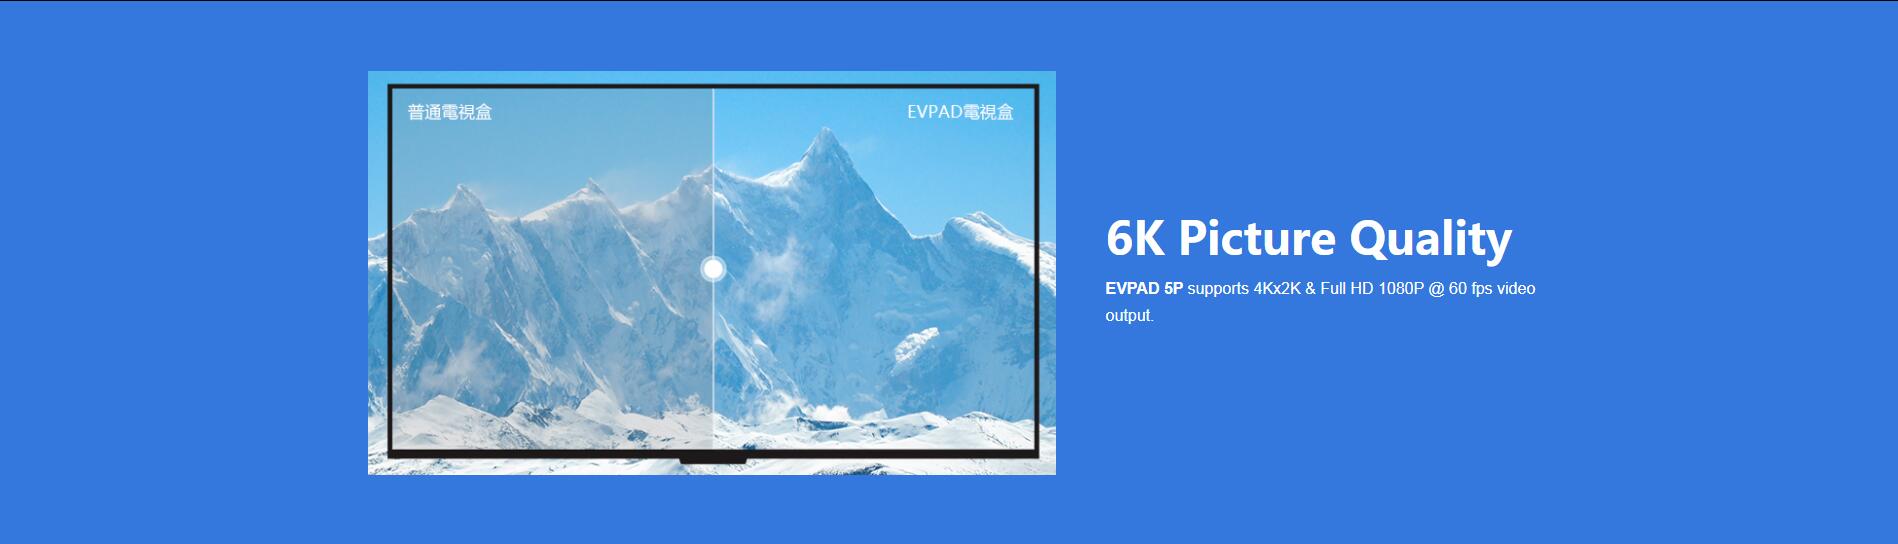 EVPAD 5P TV Box - 6K beeldkwaliteit